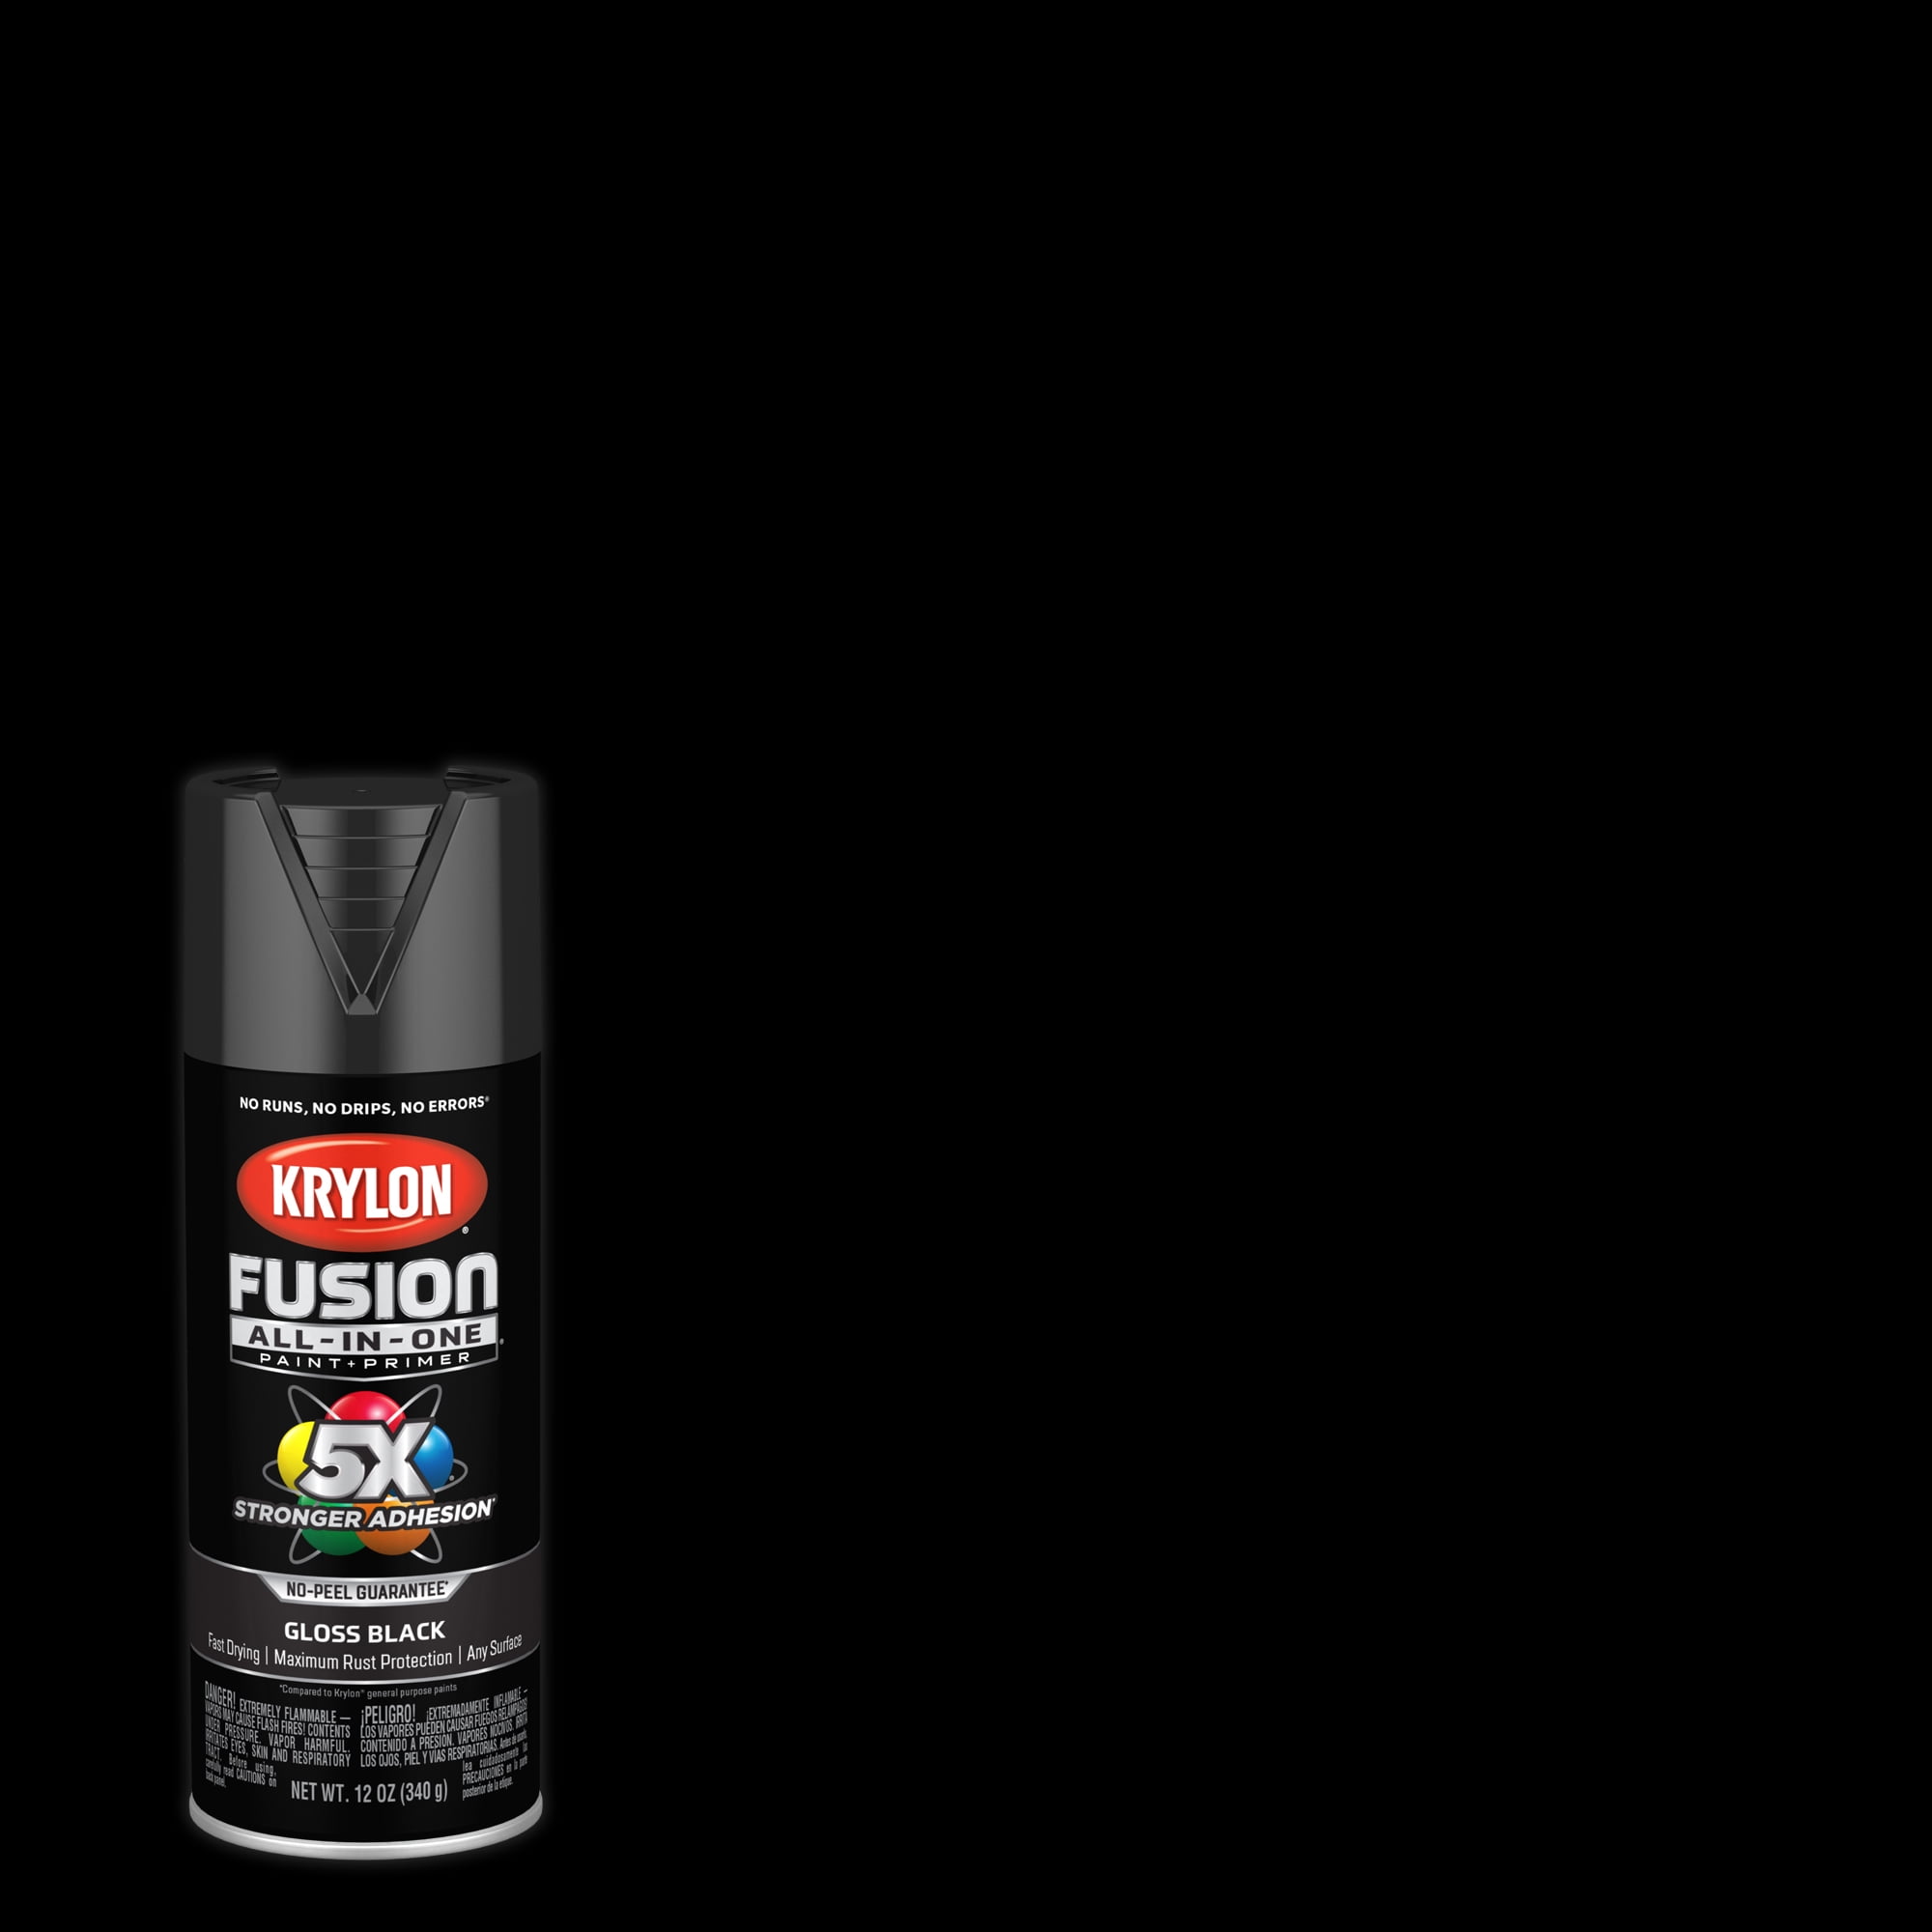 12 oz. Flat Black General Purpose Spray Paint & Primer For Wood